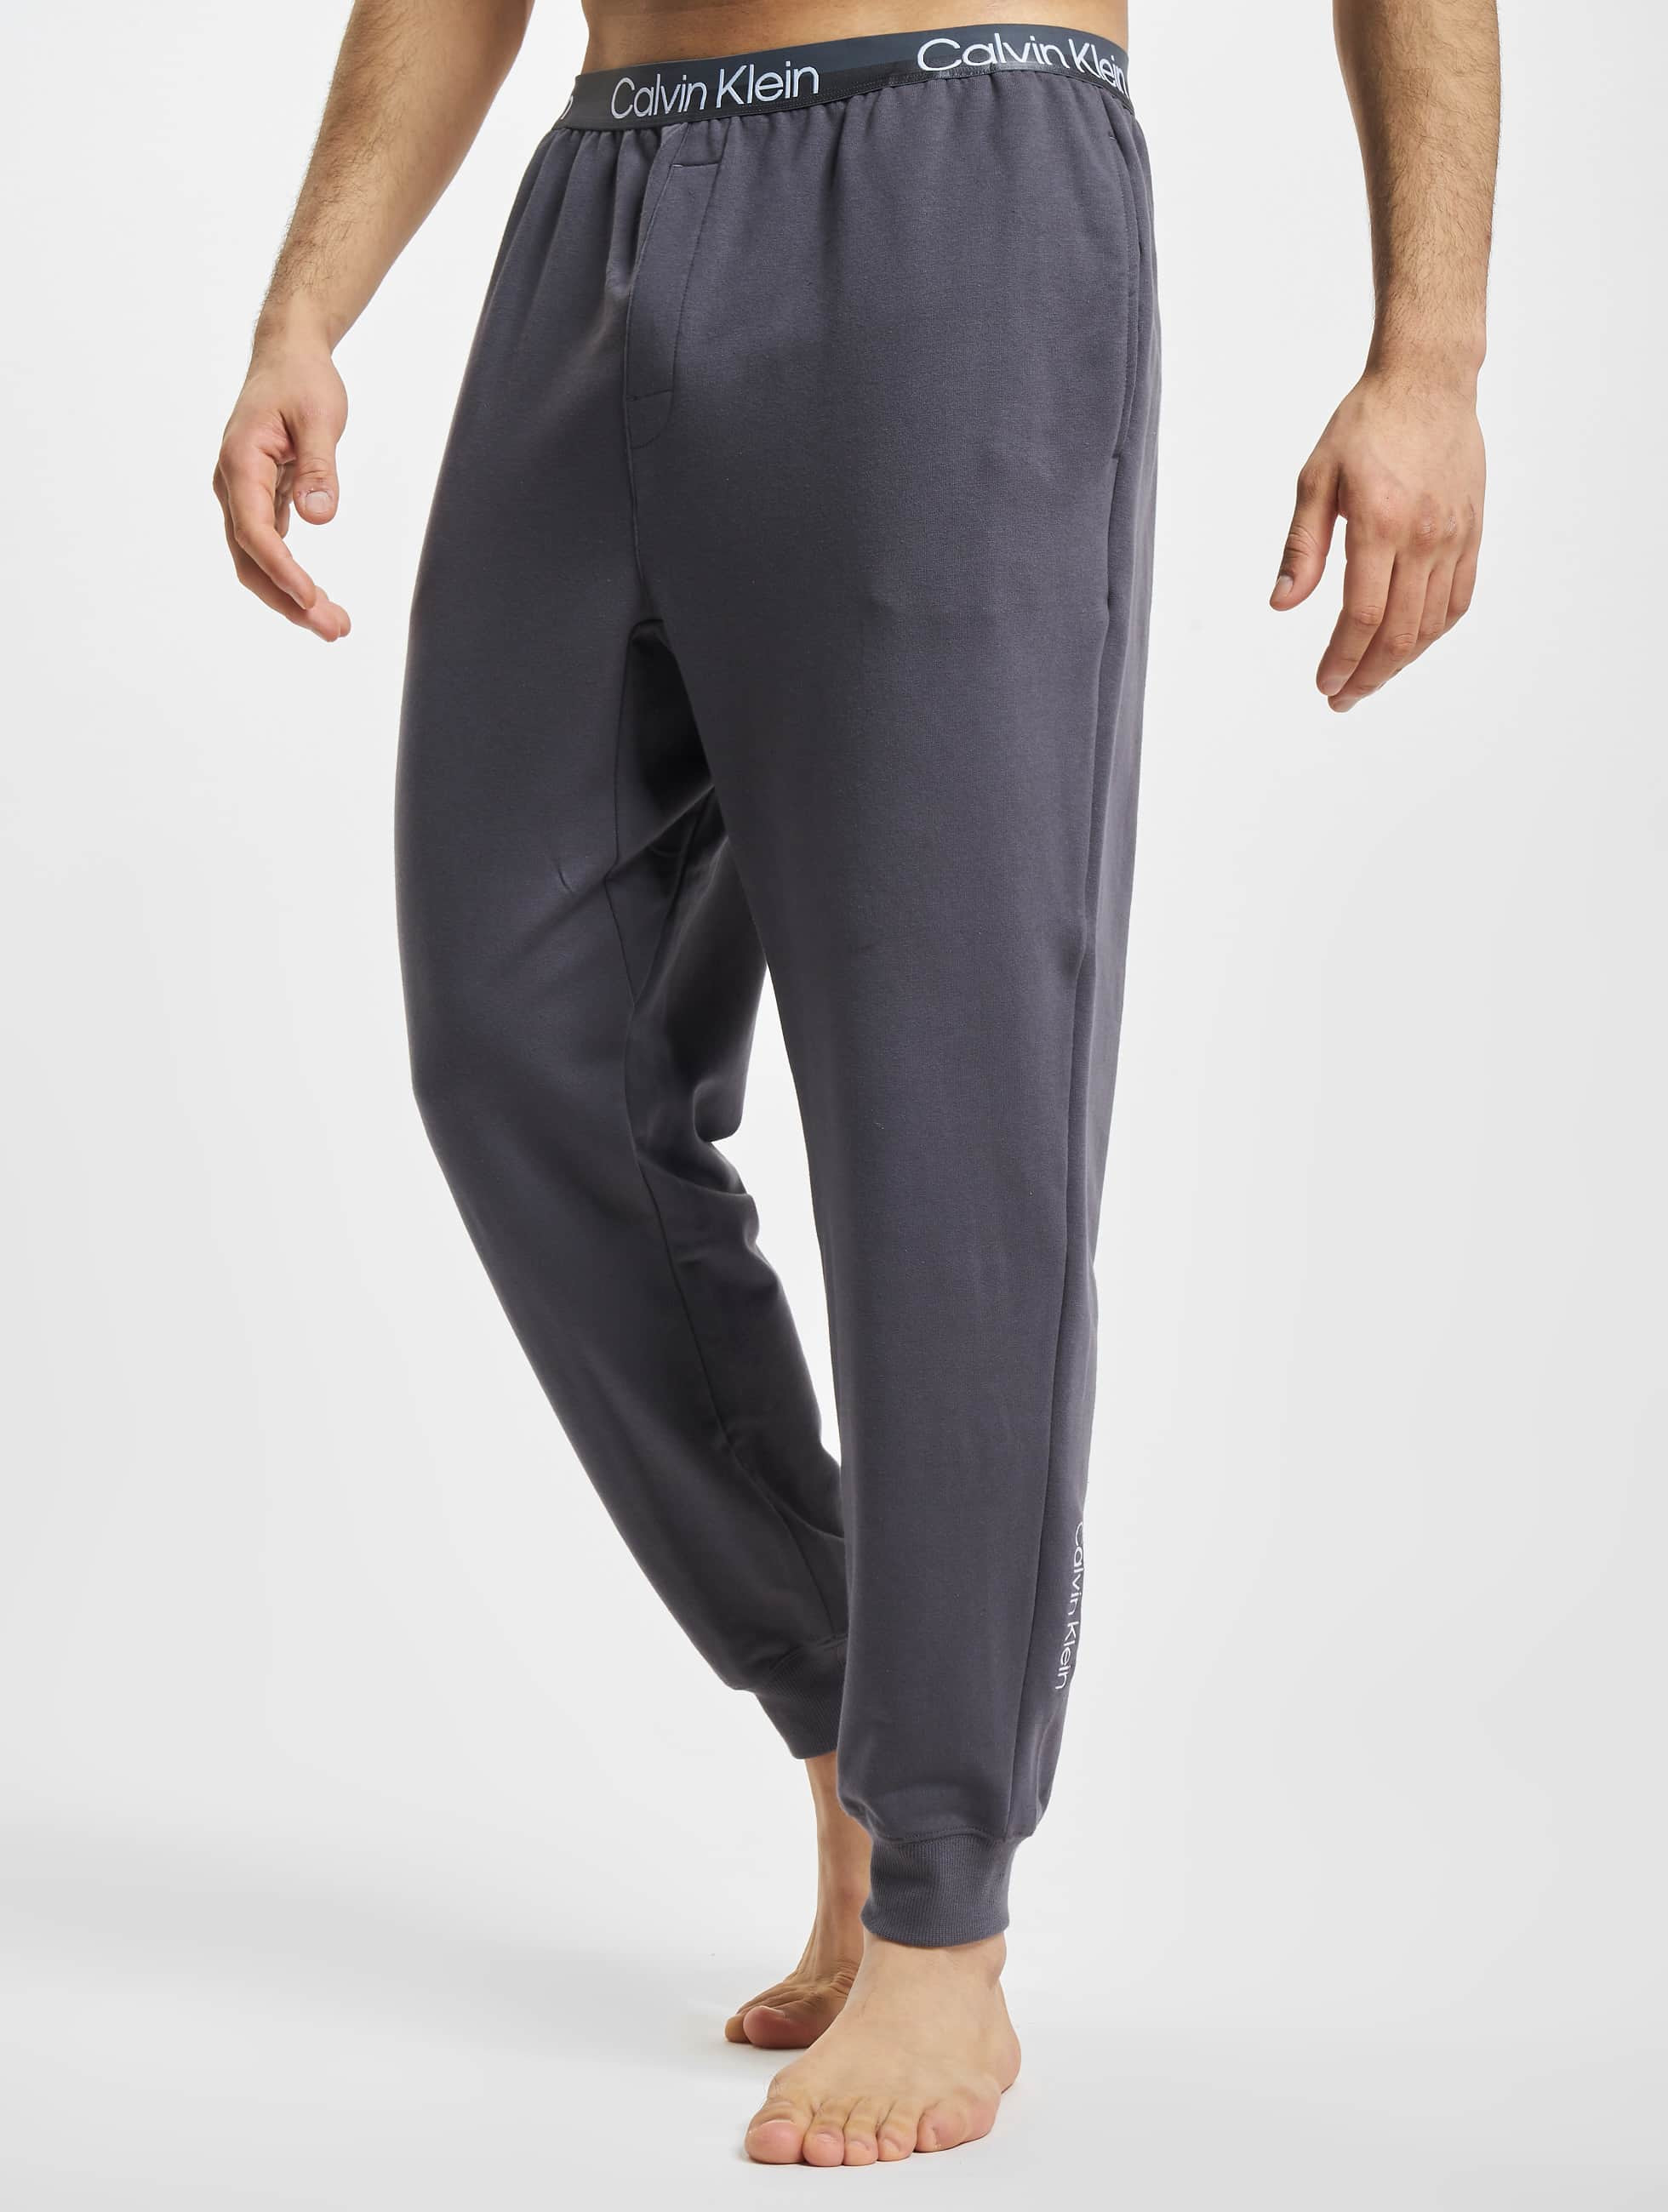 Calvin Klein Pant / Sweat Pant Underwear in grey 972139